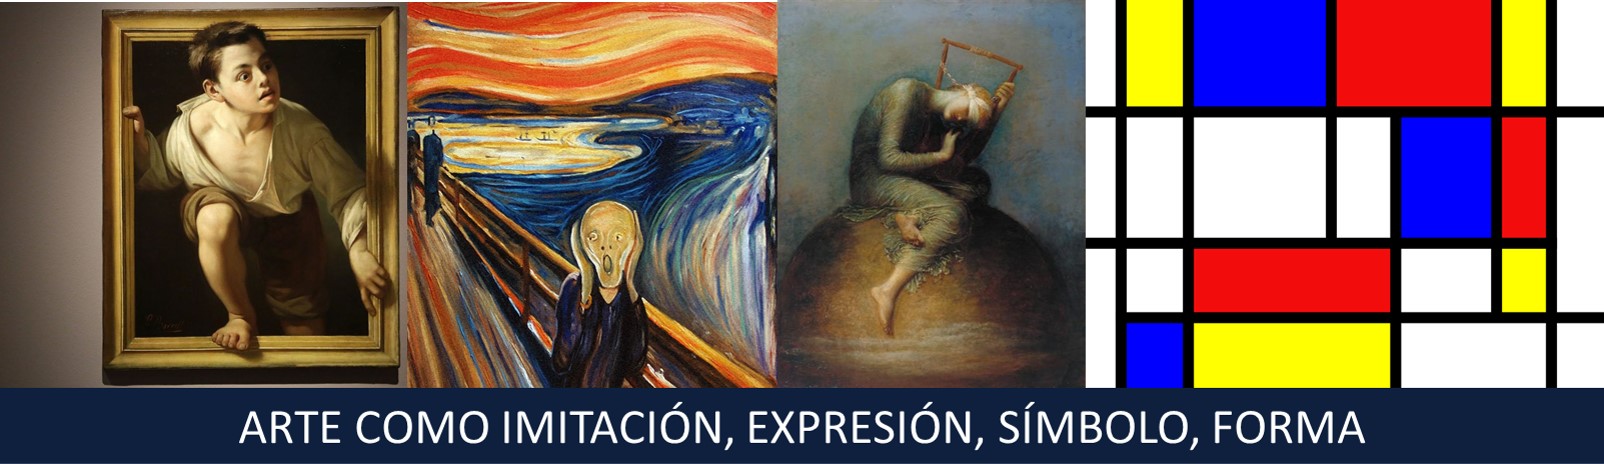 Arte como imitación, expresión, simbolismo y forma